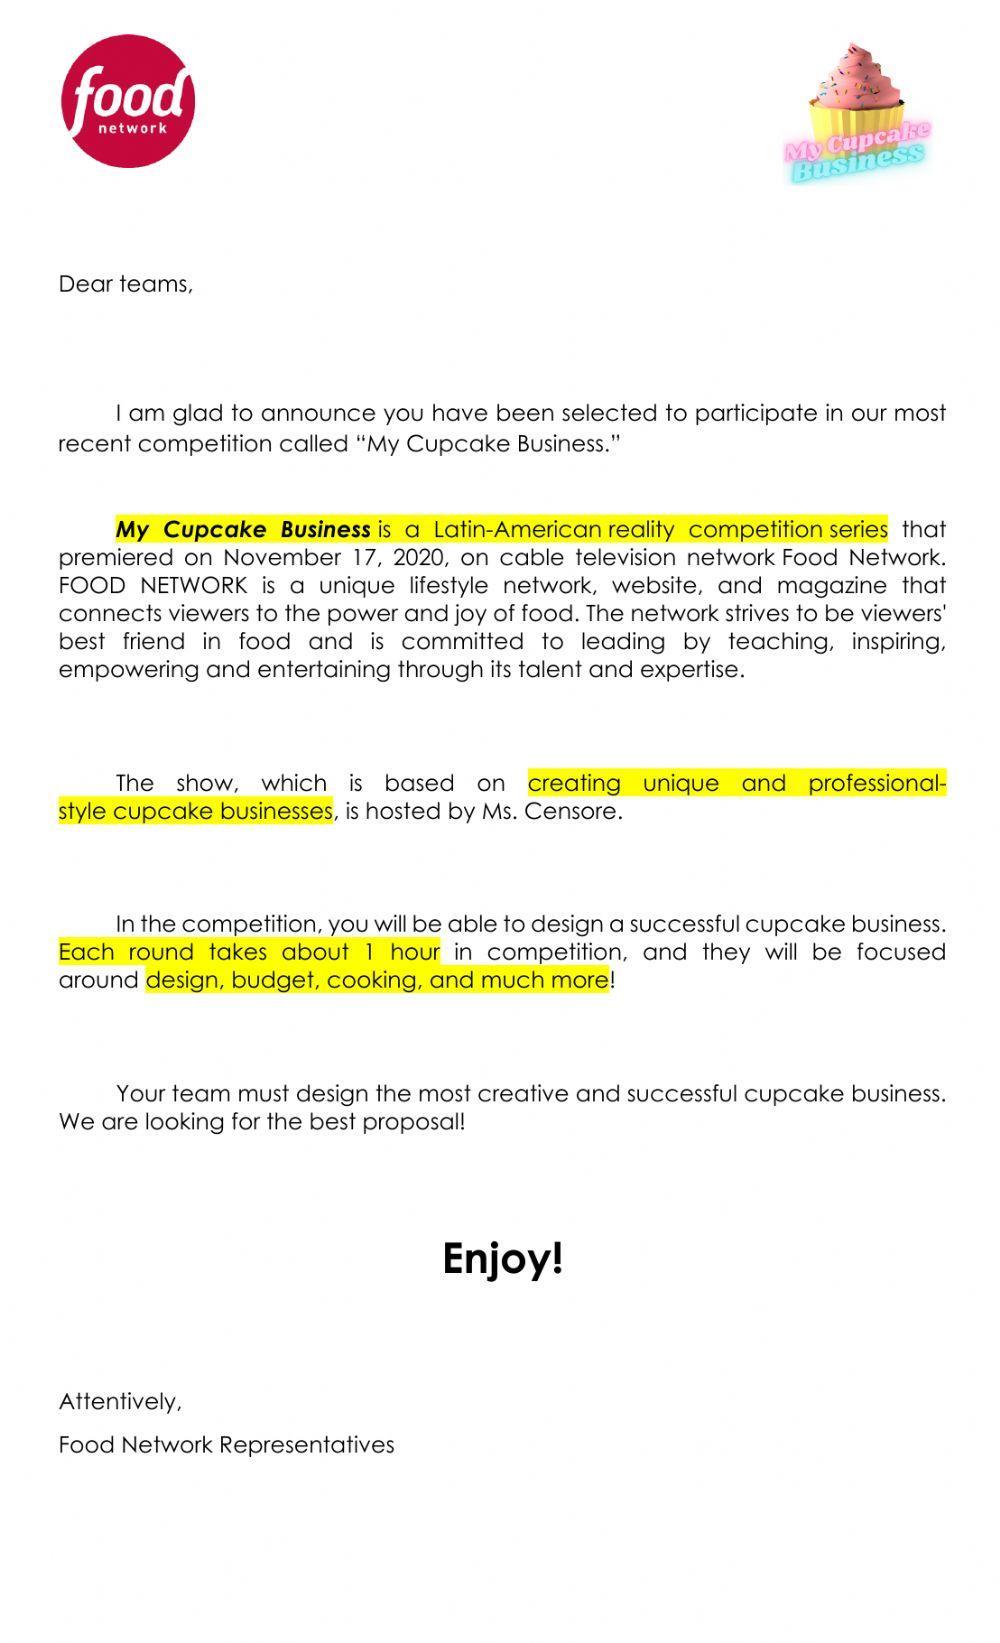 My Cupcake Business - Agreement